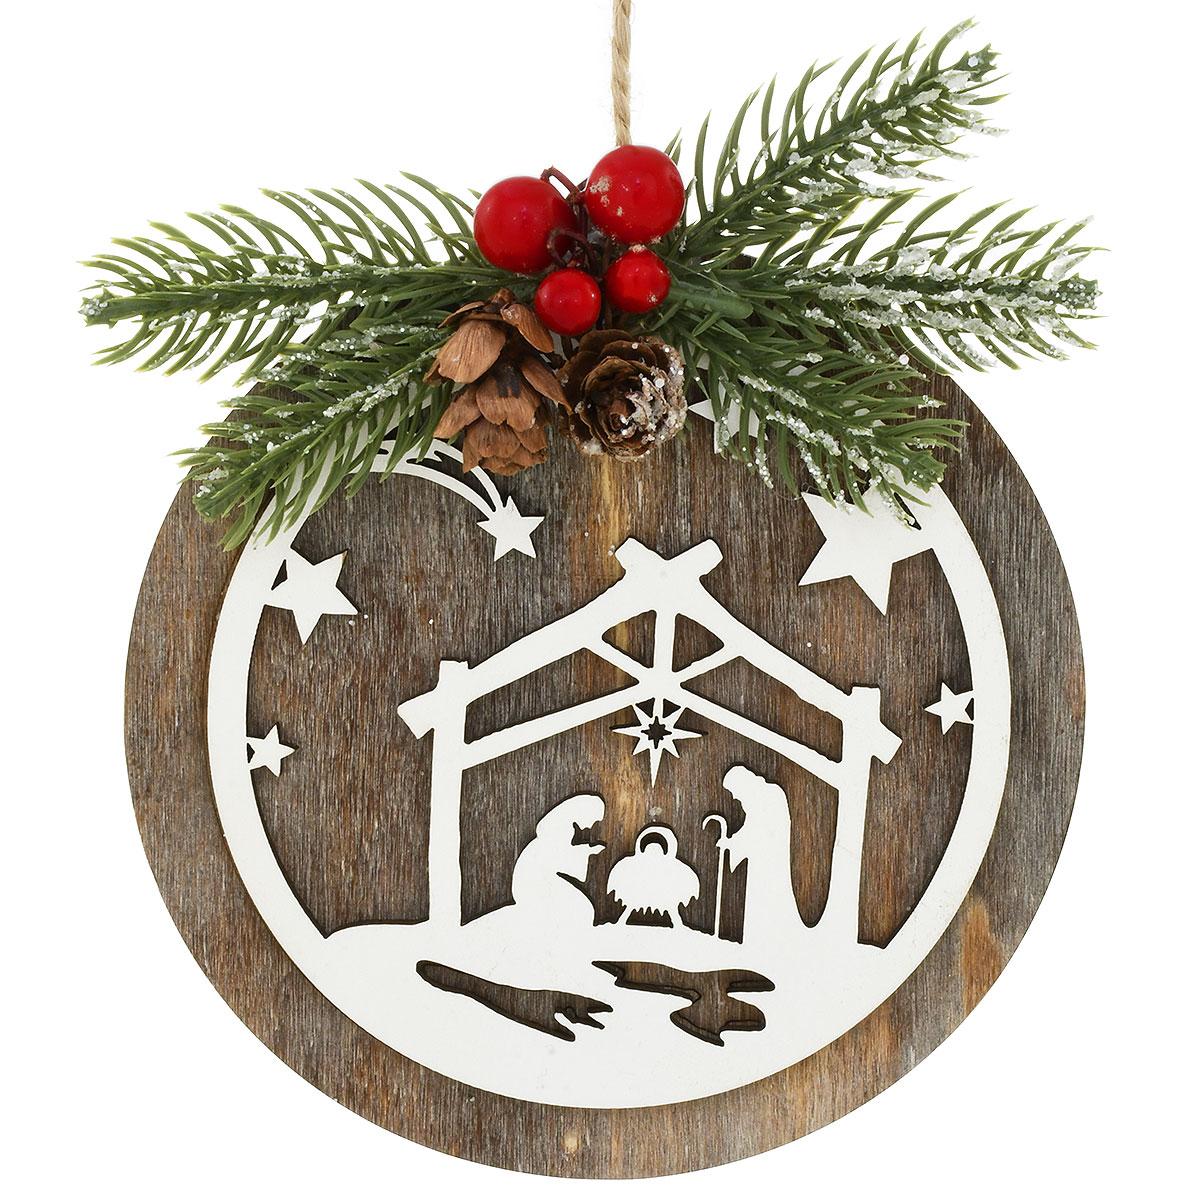 Round Wooden Nativity Ornament